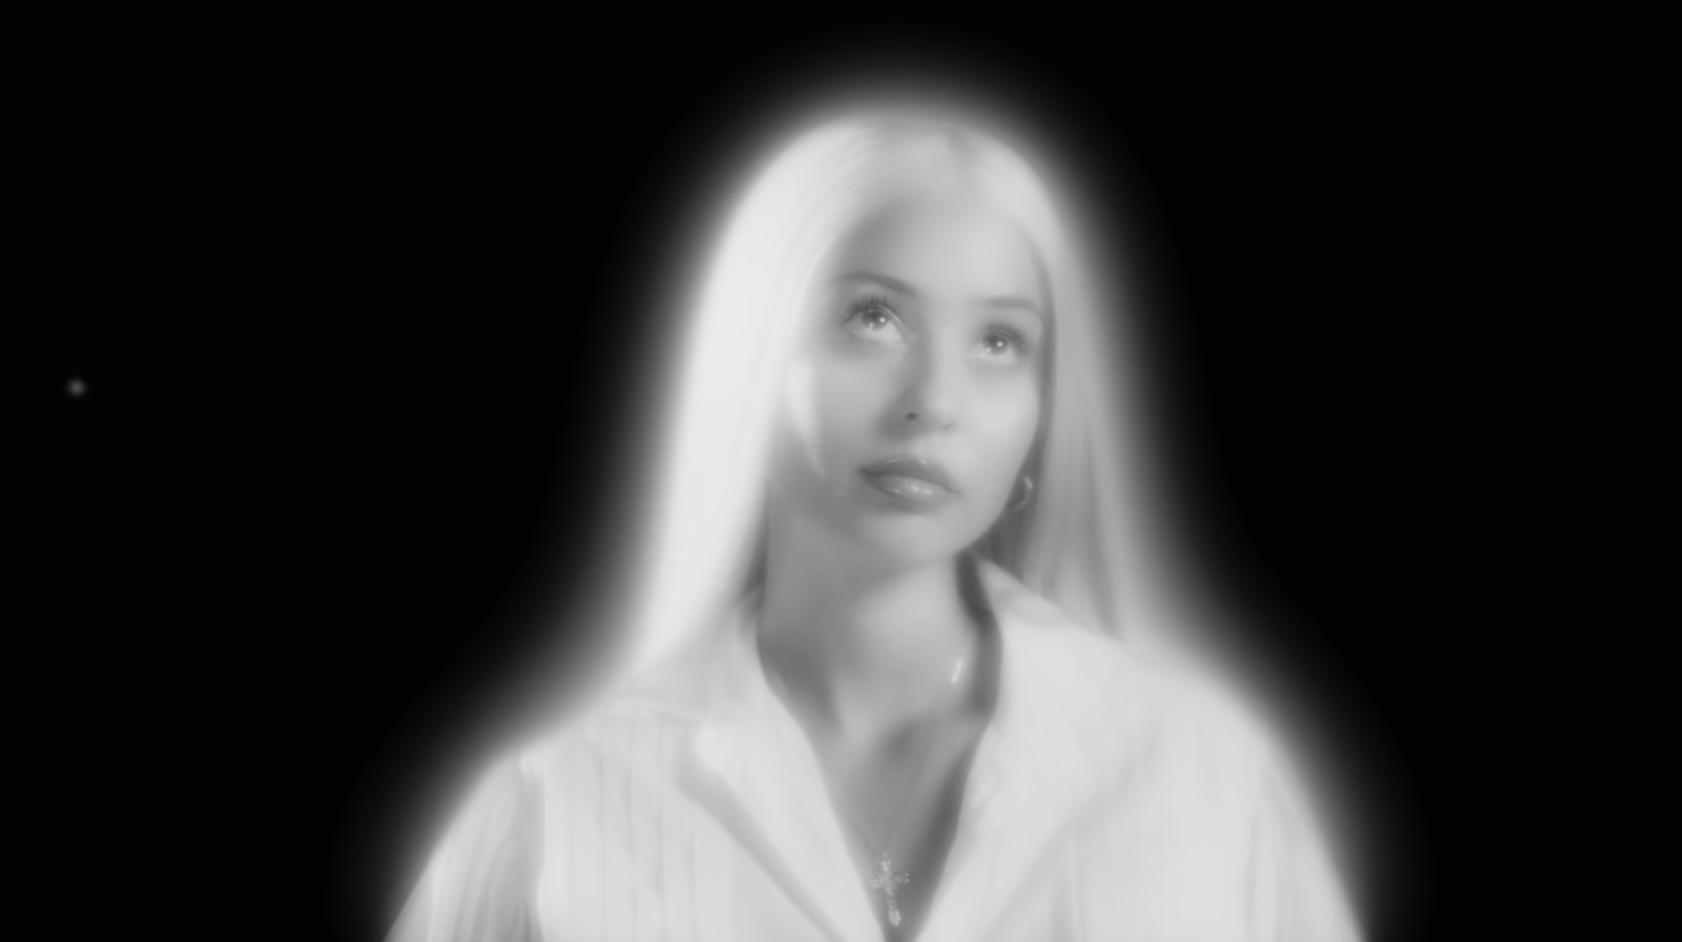 Alexa wearing a long blonde wig in her music video